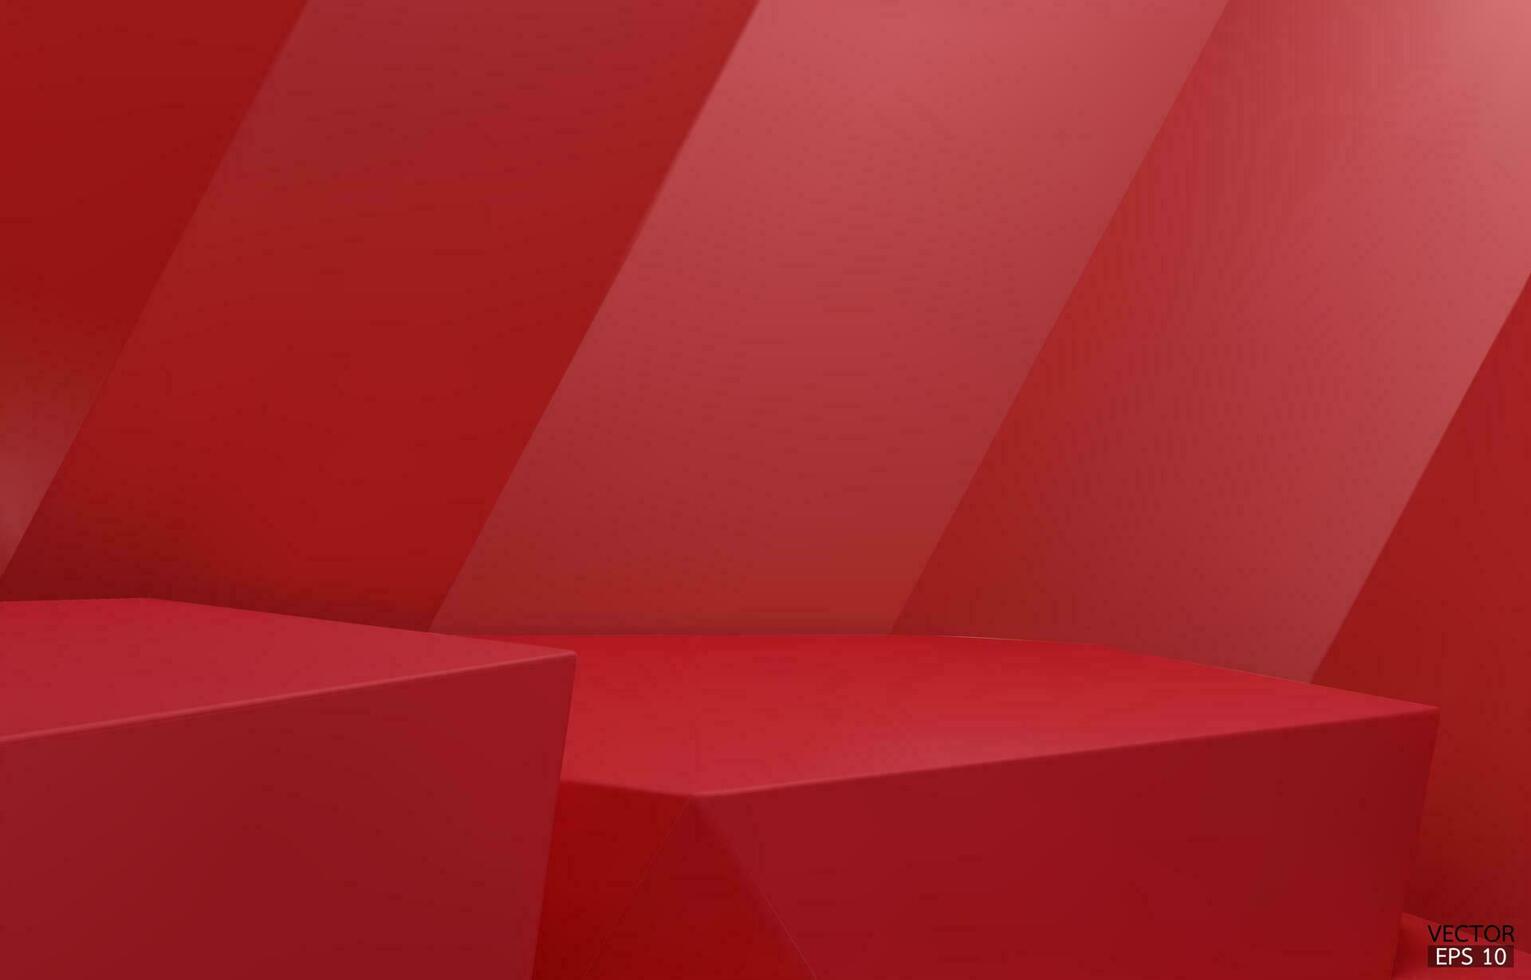 3d geometrisch 2 Schritt Podium. rot Hexagon Würfel, Platz Podium im rot Hintergrund. Konzept Szene Bühne Vitrine, Produkt, Beförderung Verkauf, Banner, Präsentation, Kosmetik. 3d Vektor Illustration.